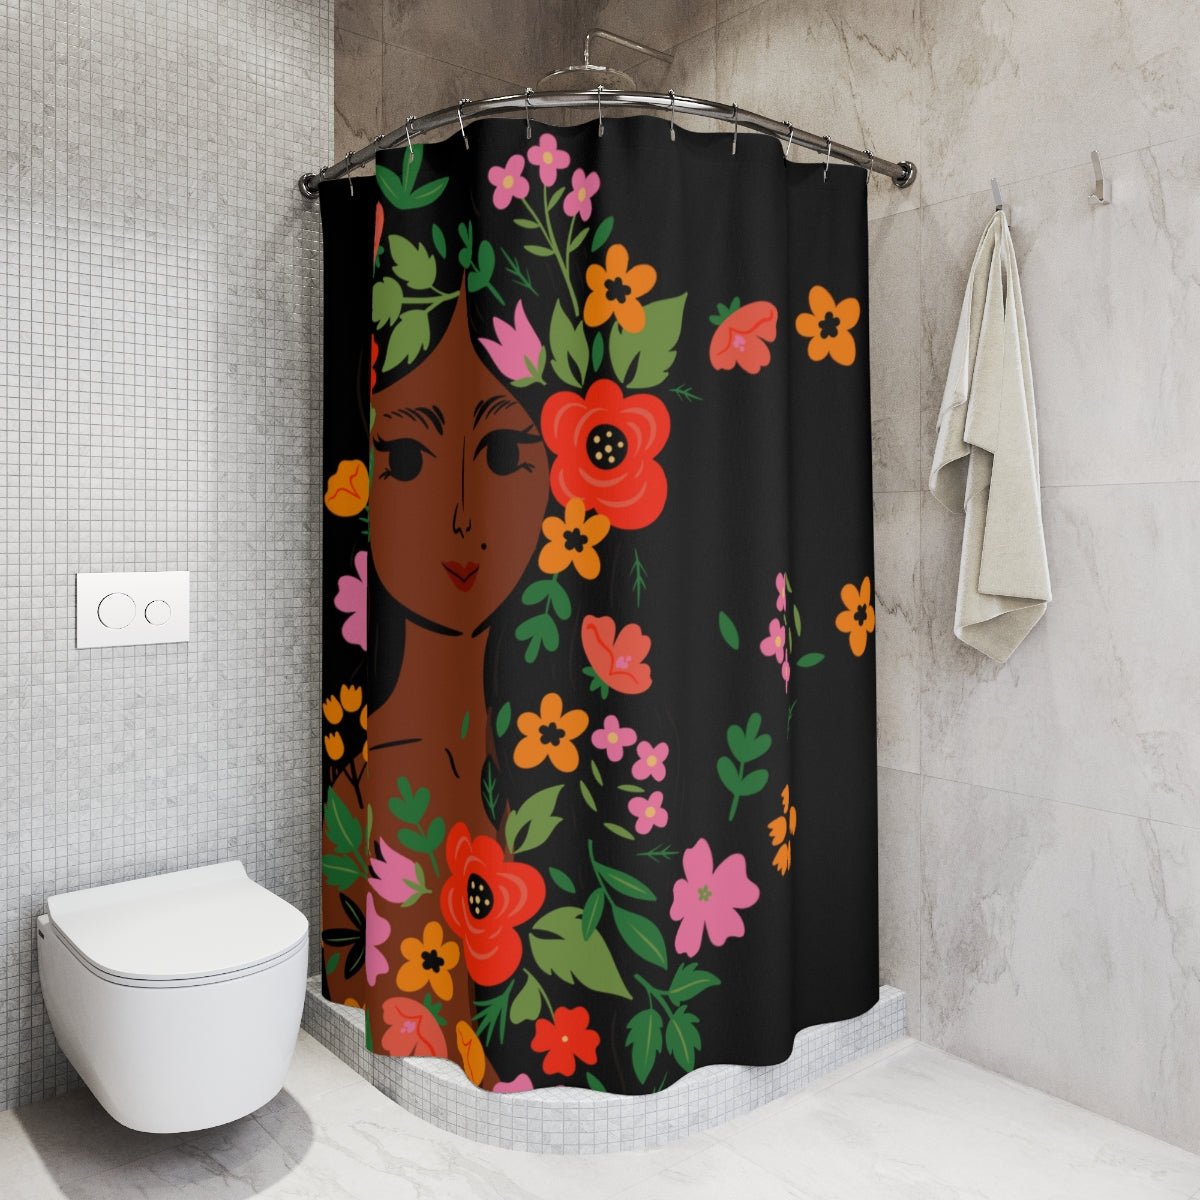 Flower Woman Shower Curtain - The Trini Gee